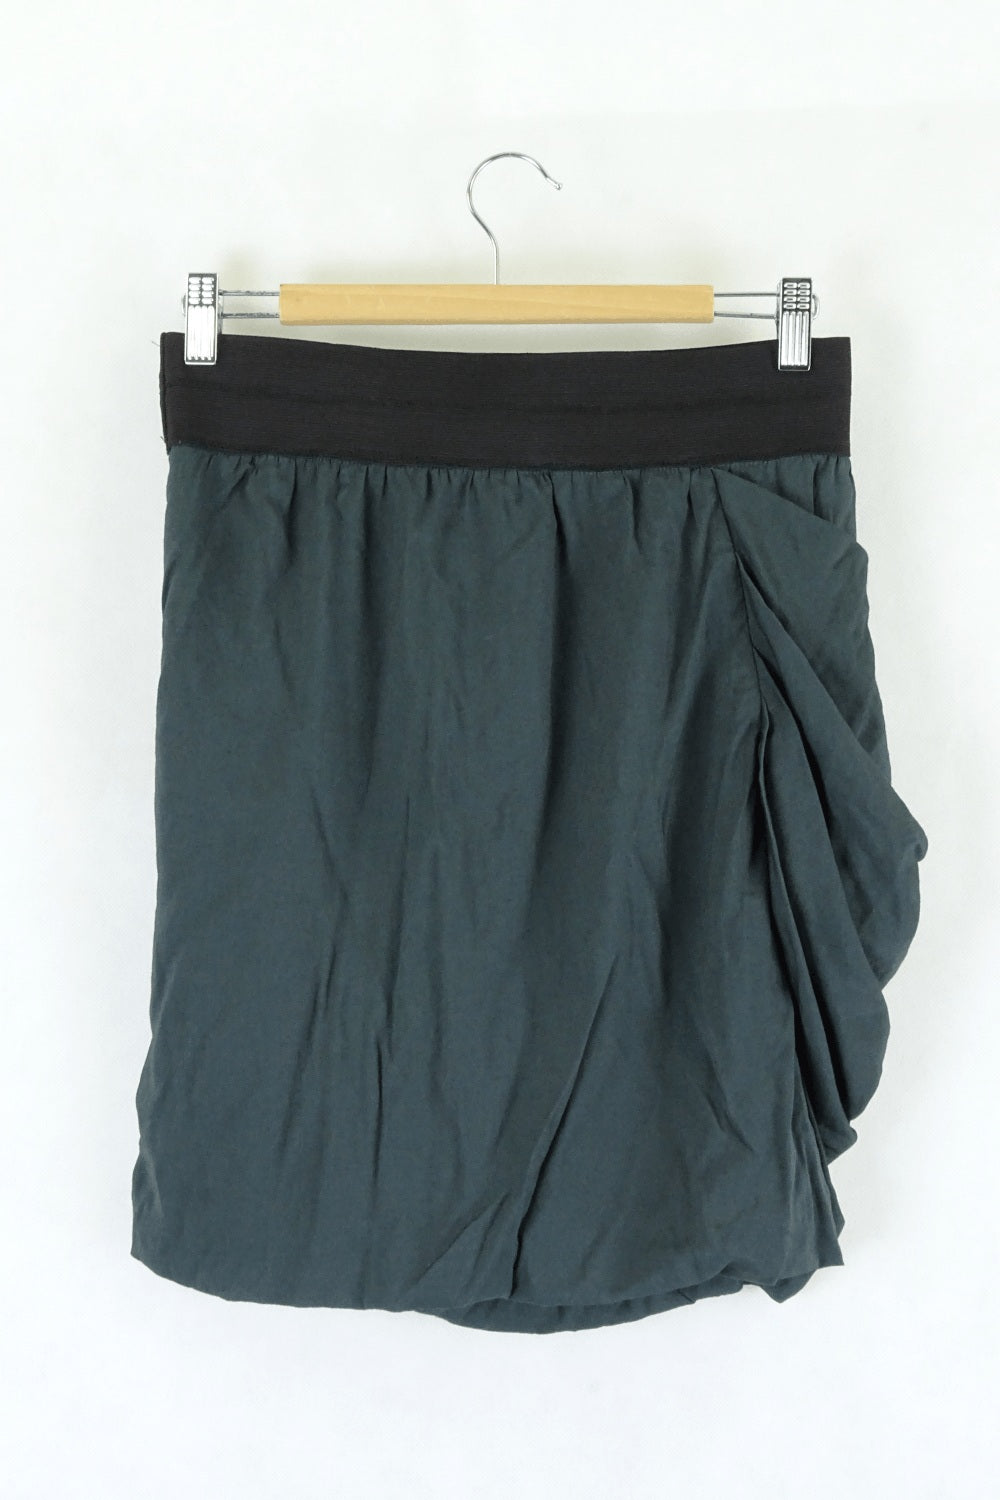 Kinki Gerlinki Green Skirt 12